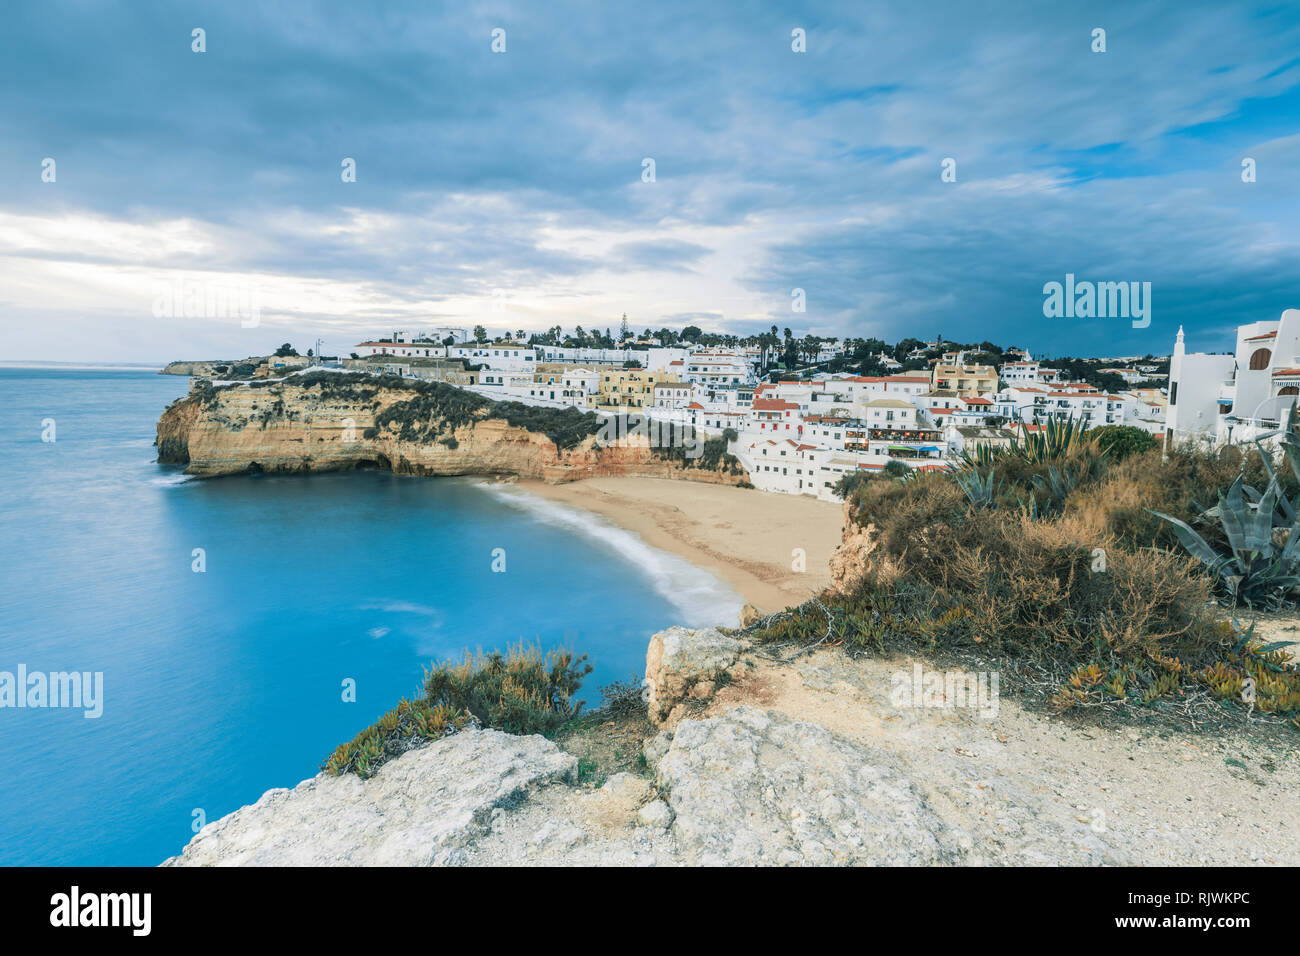 Stormy sky above village and sandy beach, Carvoeiro, Algarve, Portugal, Europe Stock Photo